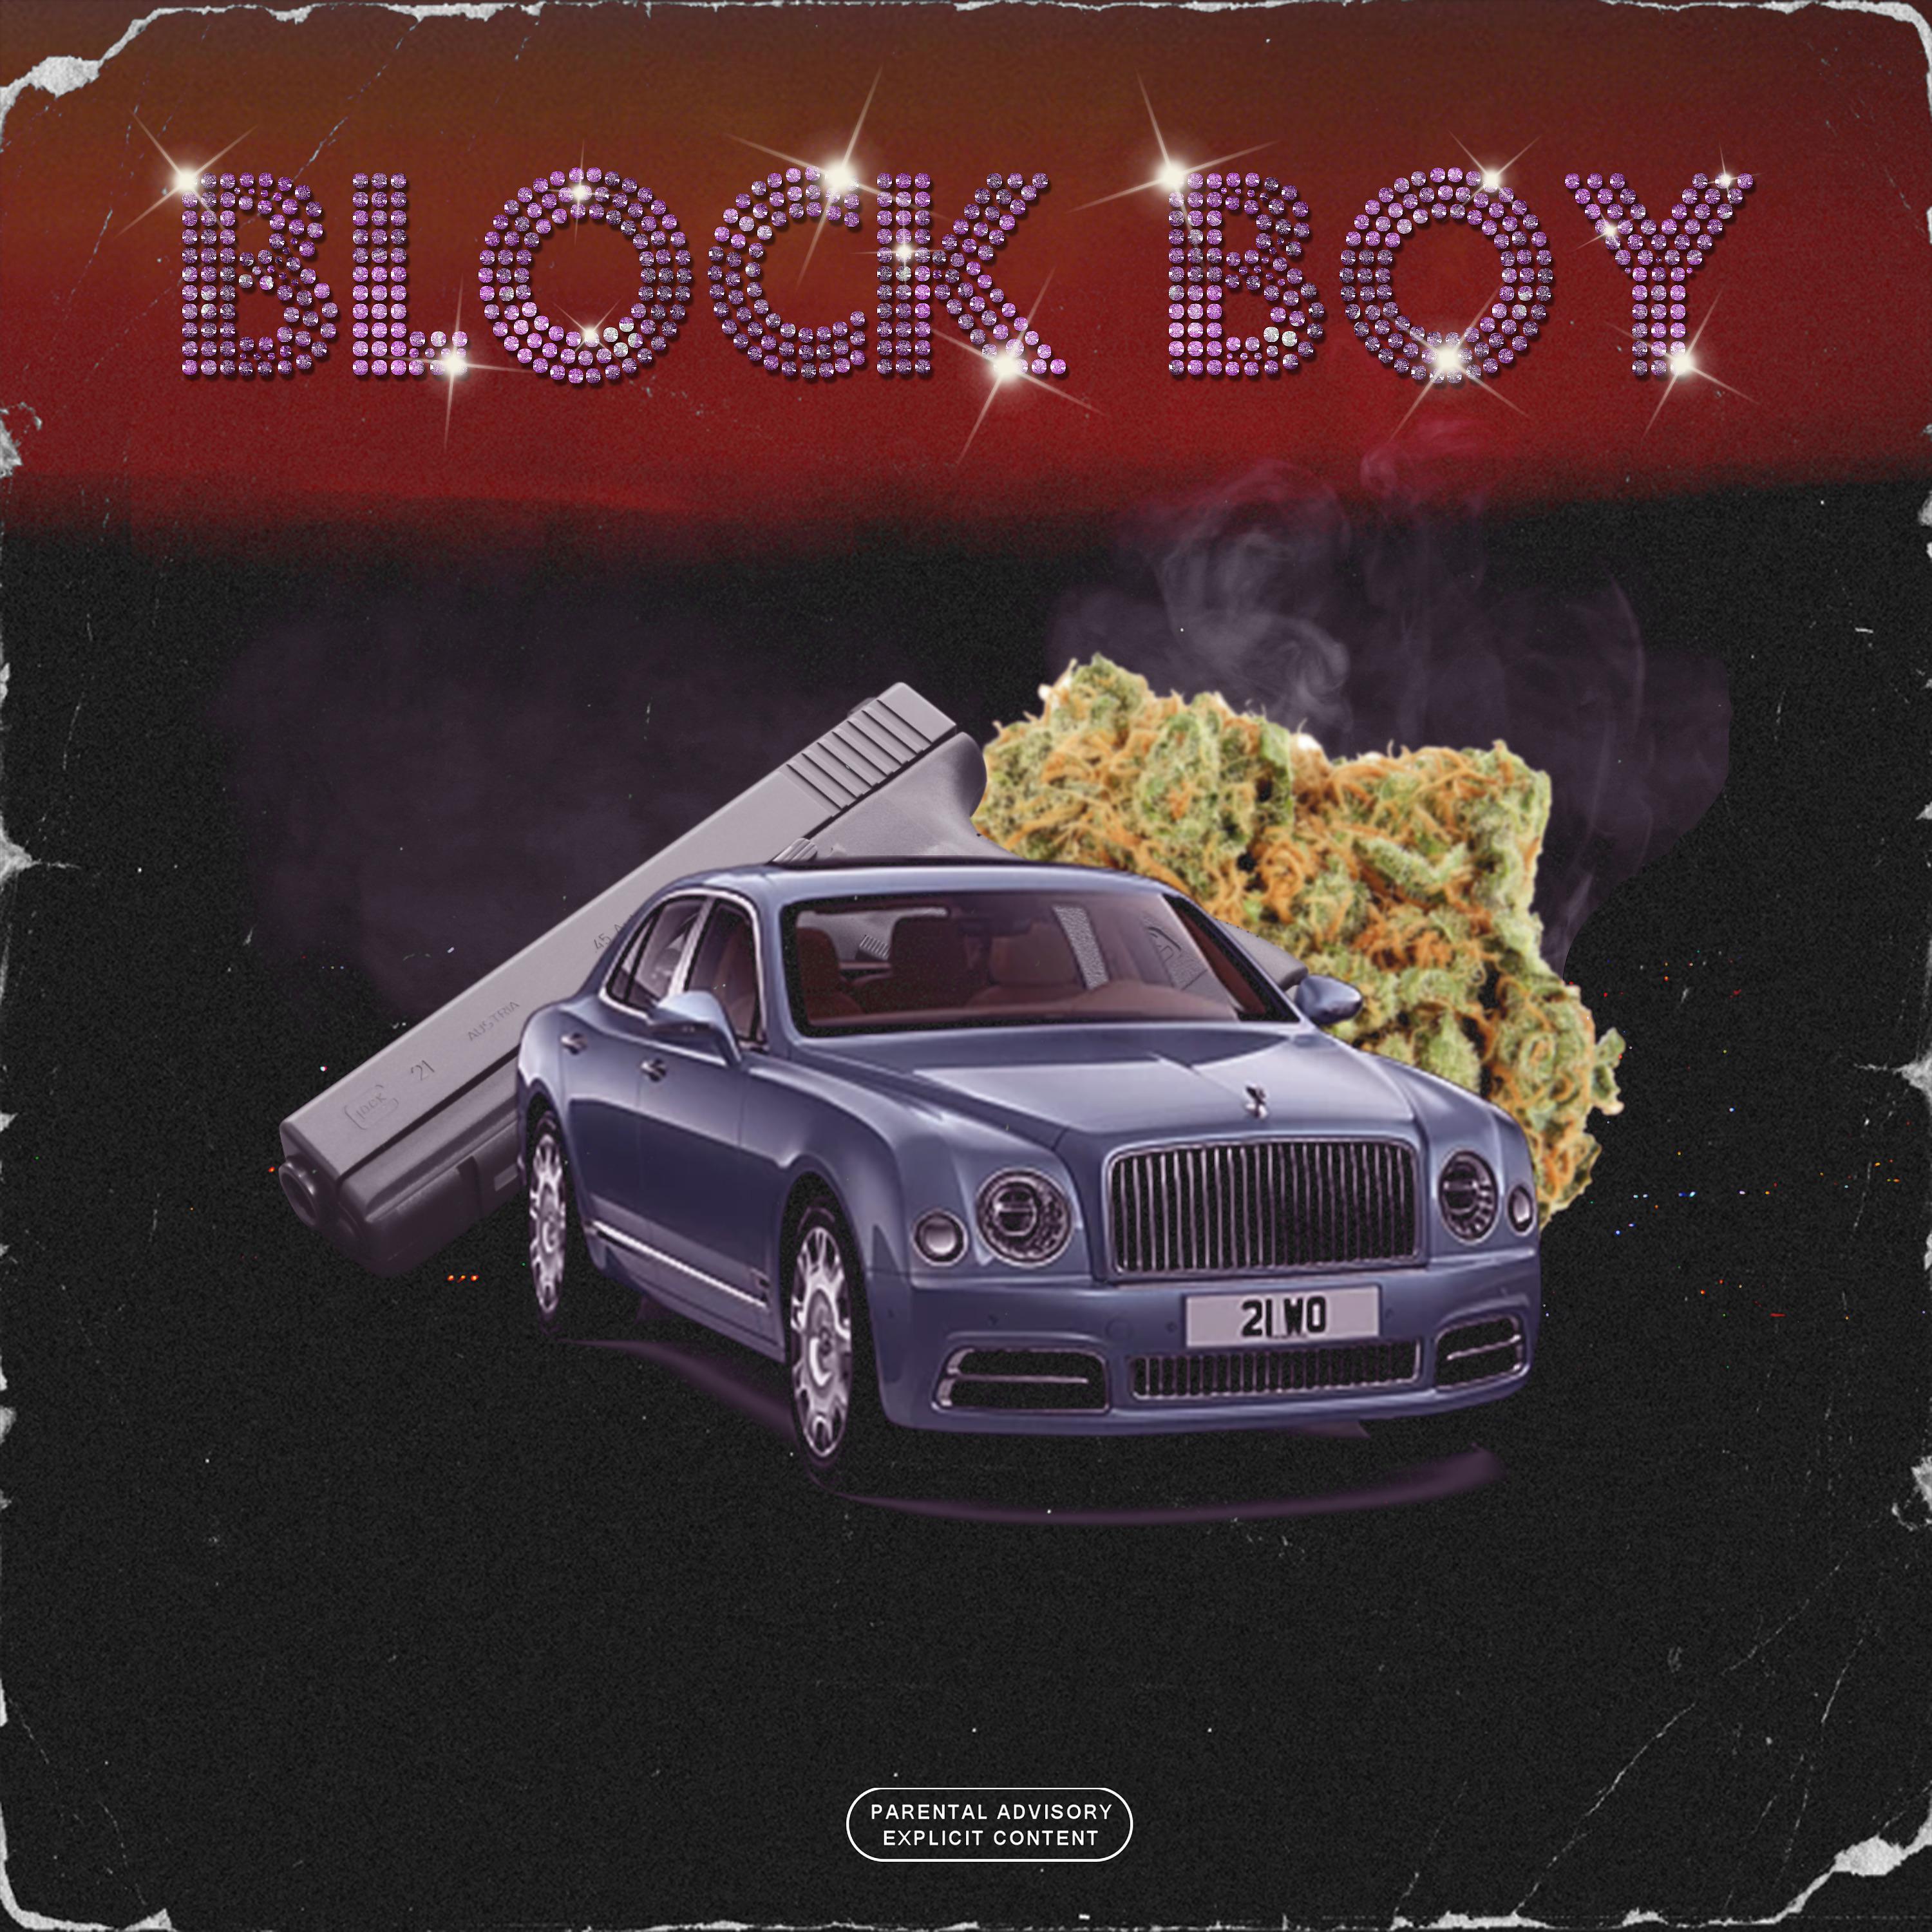 Постер альбома Block Boy